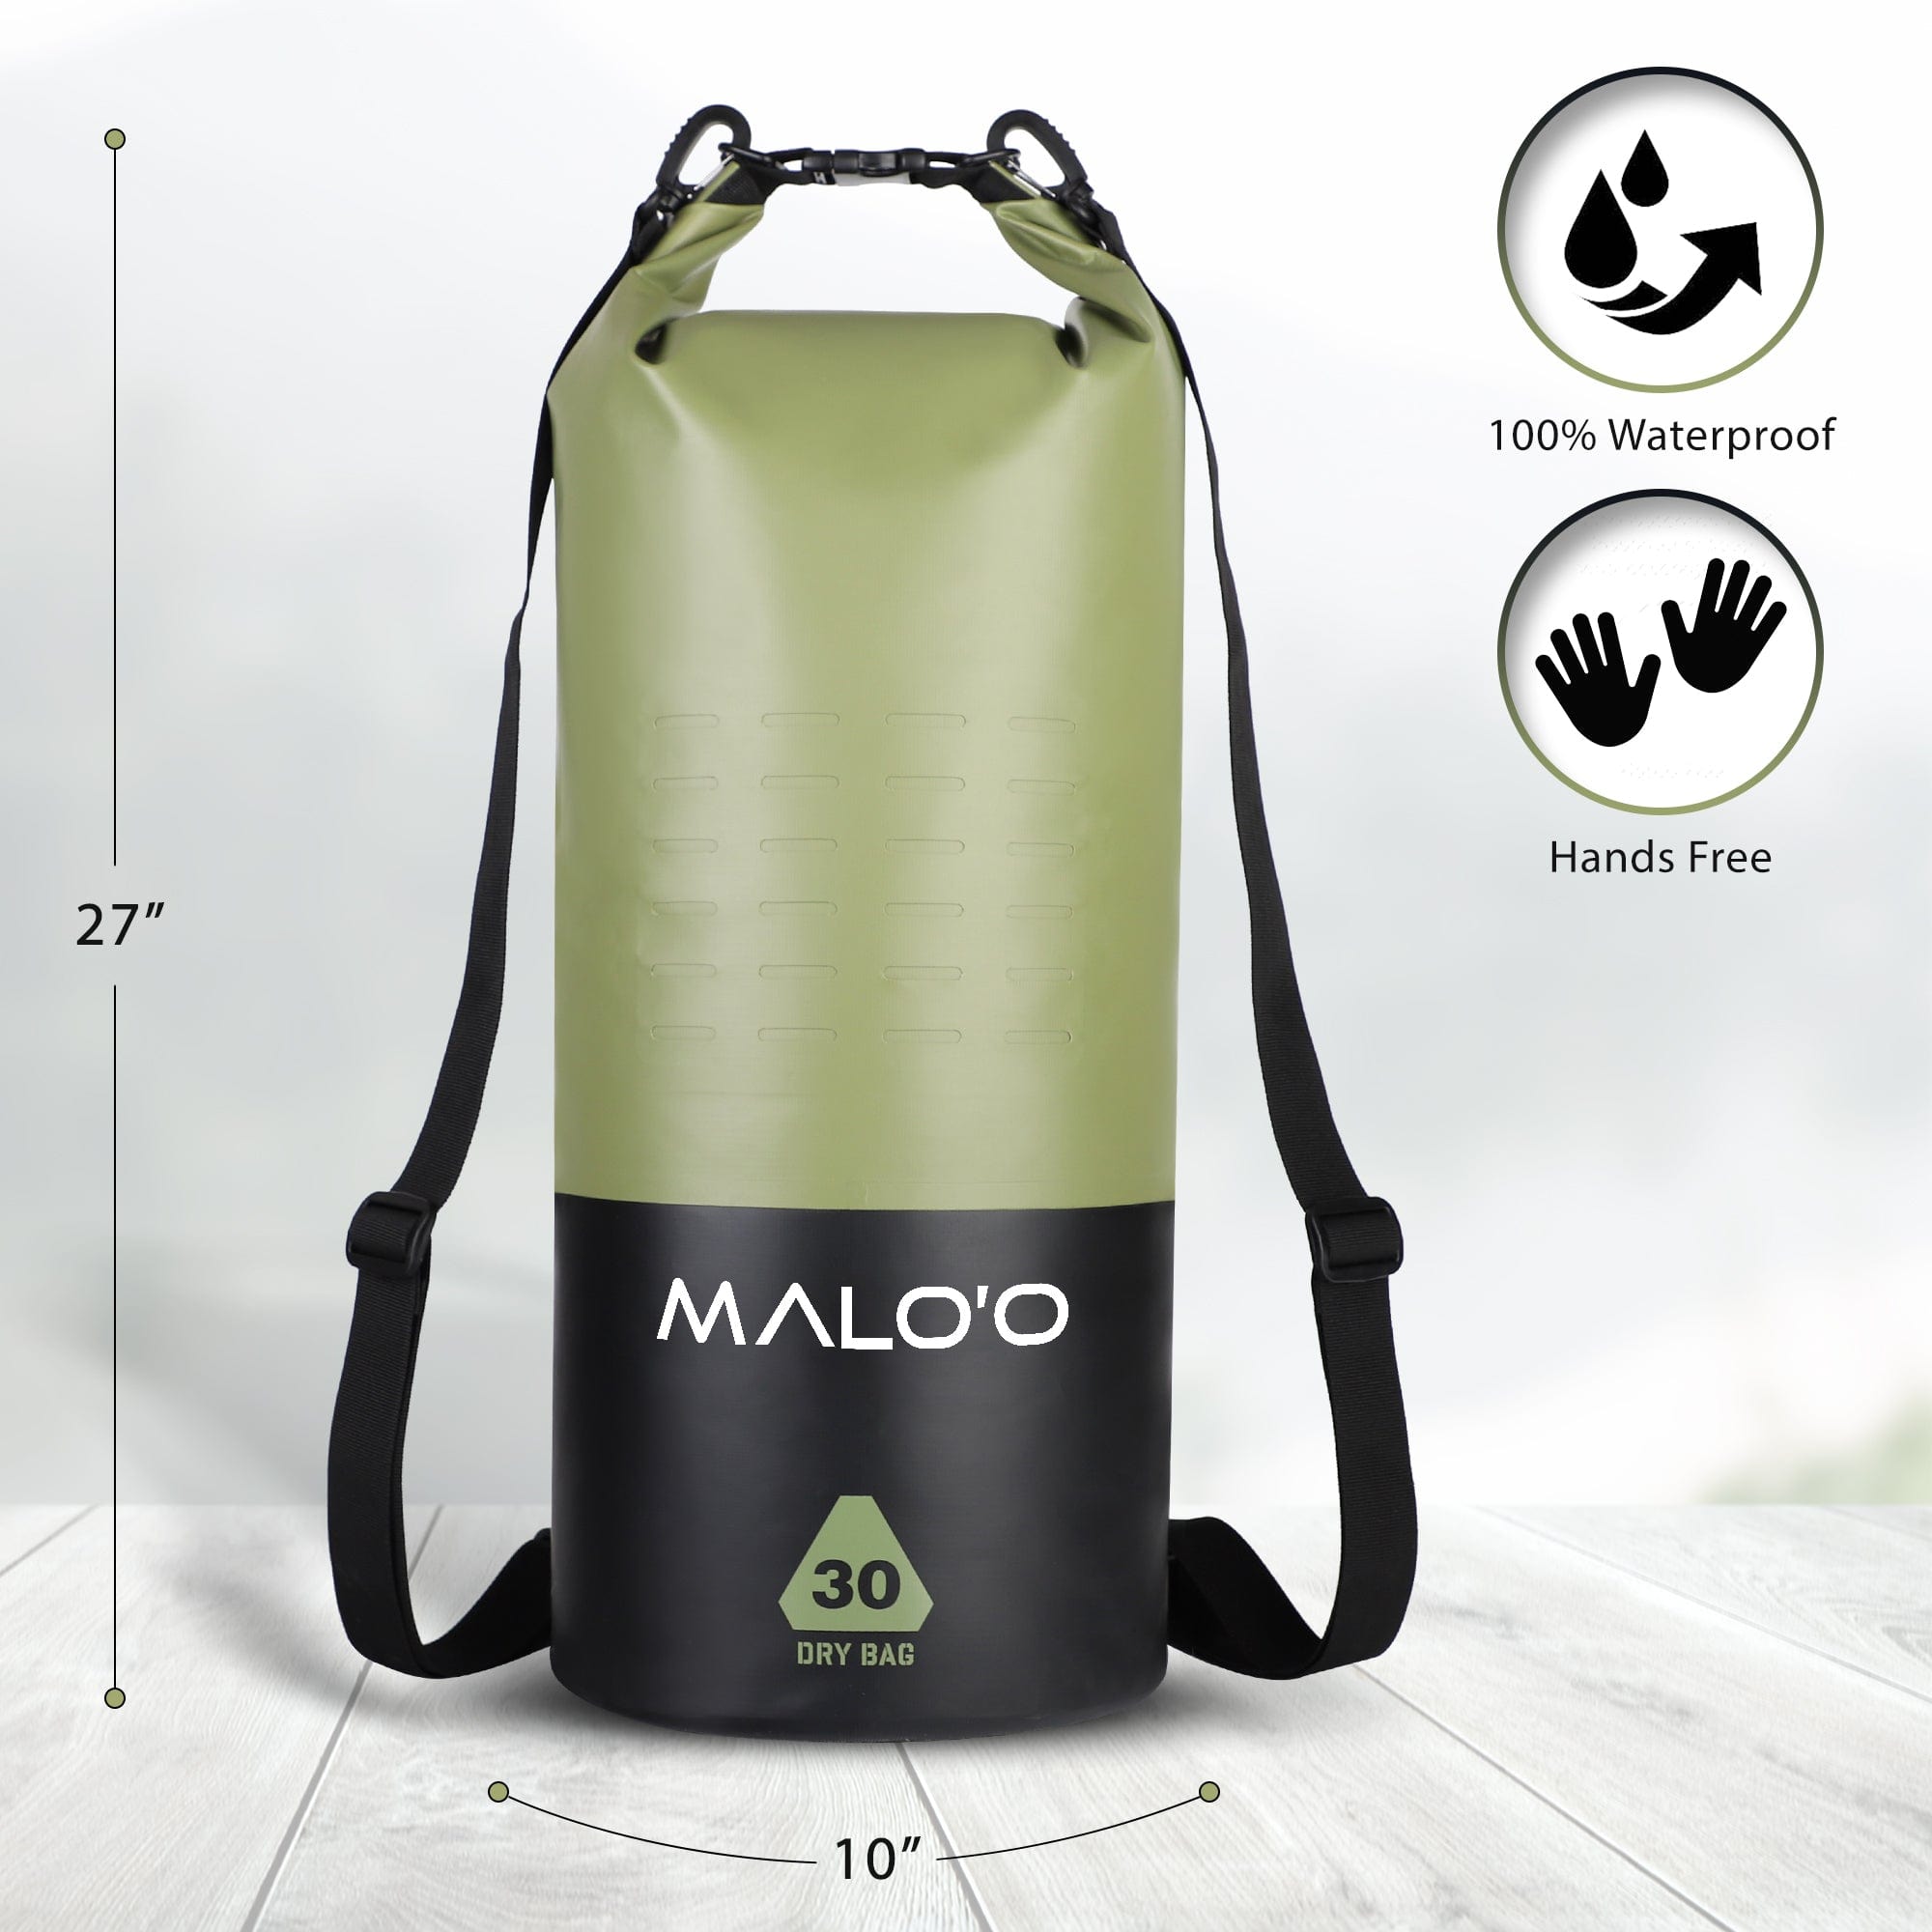 Malo'o Drypack Waterproof Backpack - 30L Dark Green